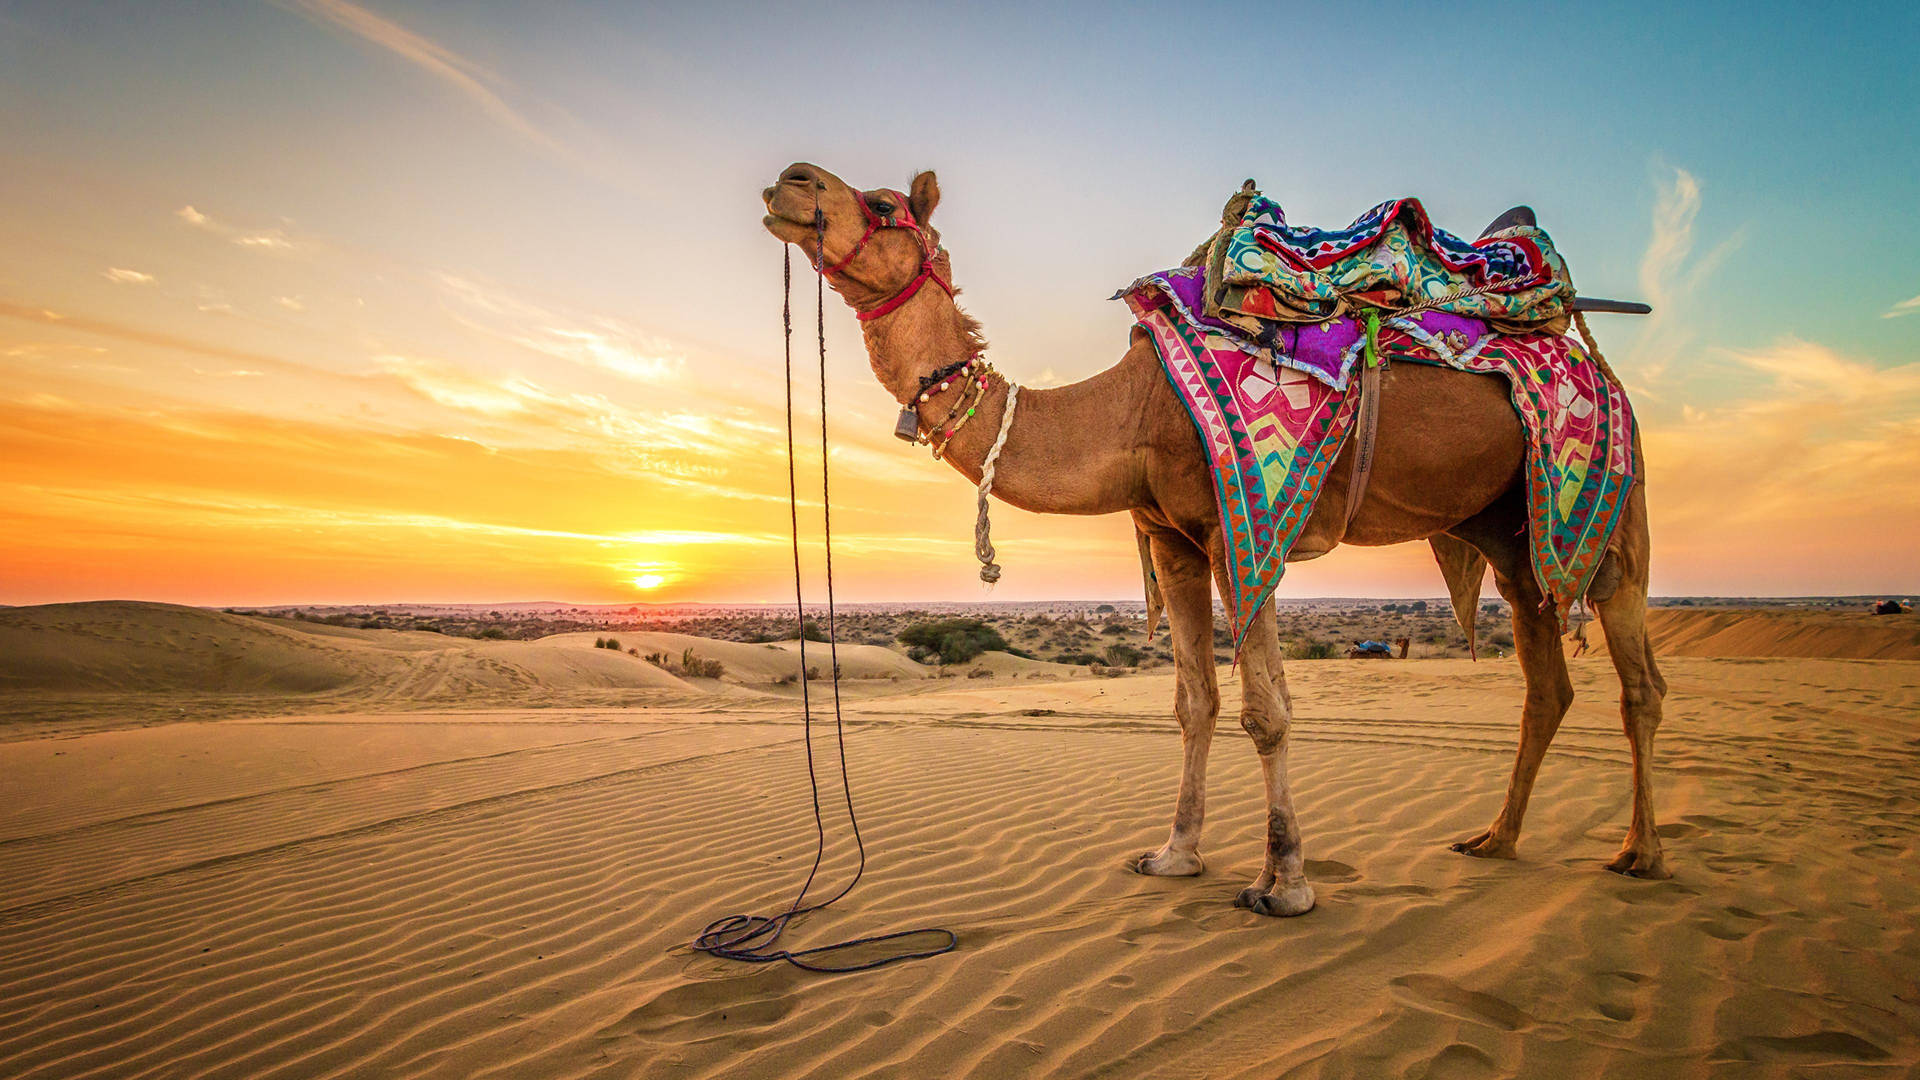 Desert Camel Photography Wallpaper